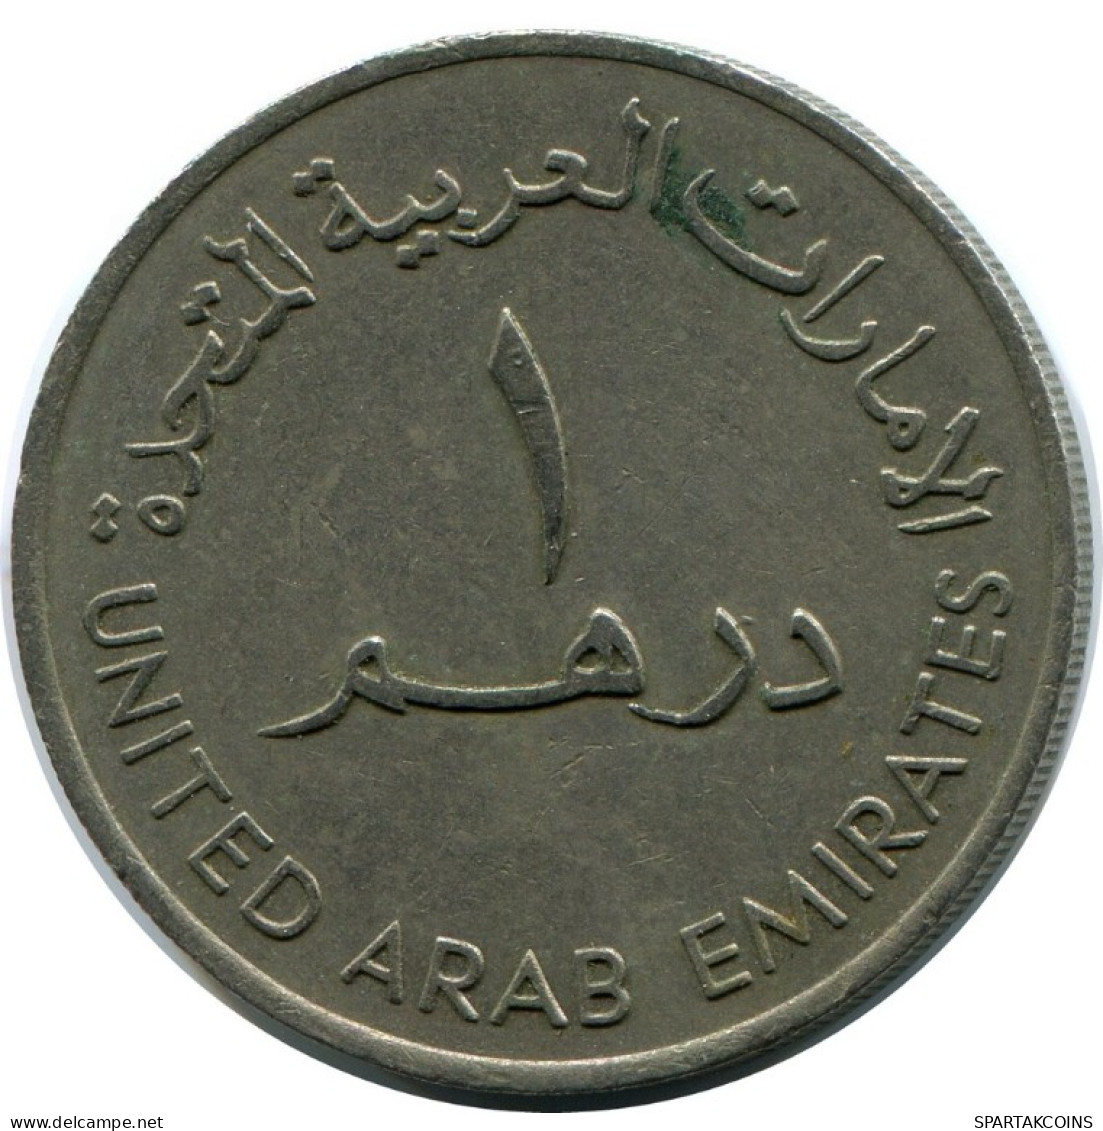 1 DIRHAM 1973 UAE UNITED ARAB EMIRATES Islamic Coin #AH990.U.A - Verenigde Arabische Emiraten